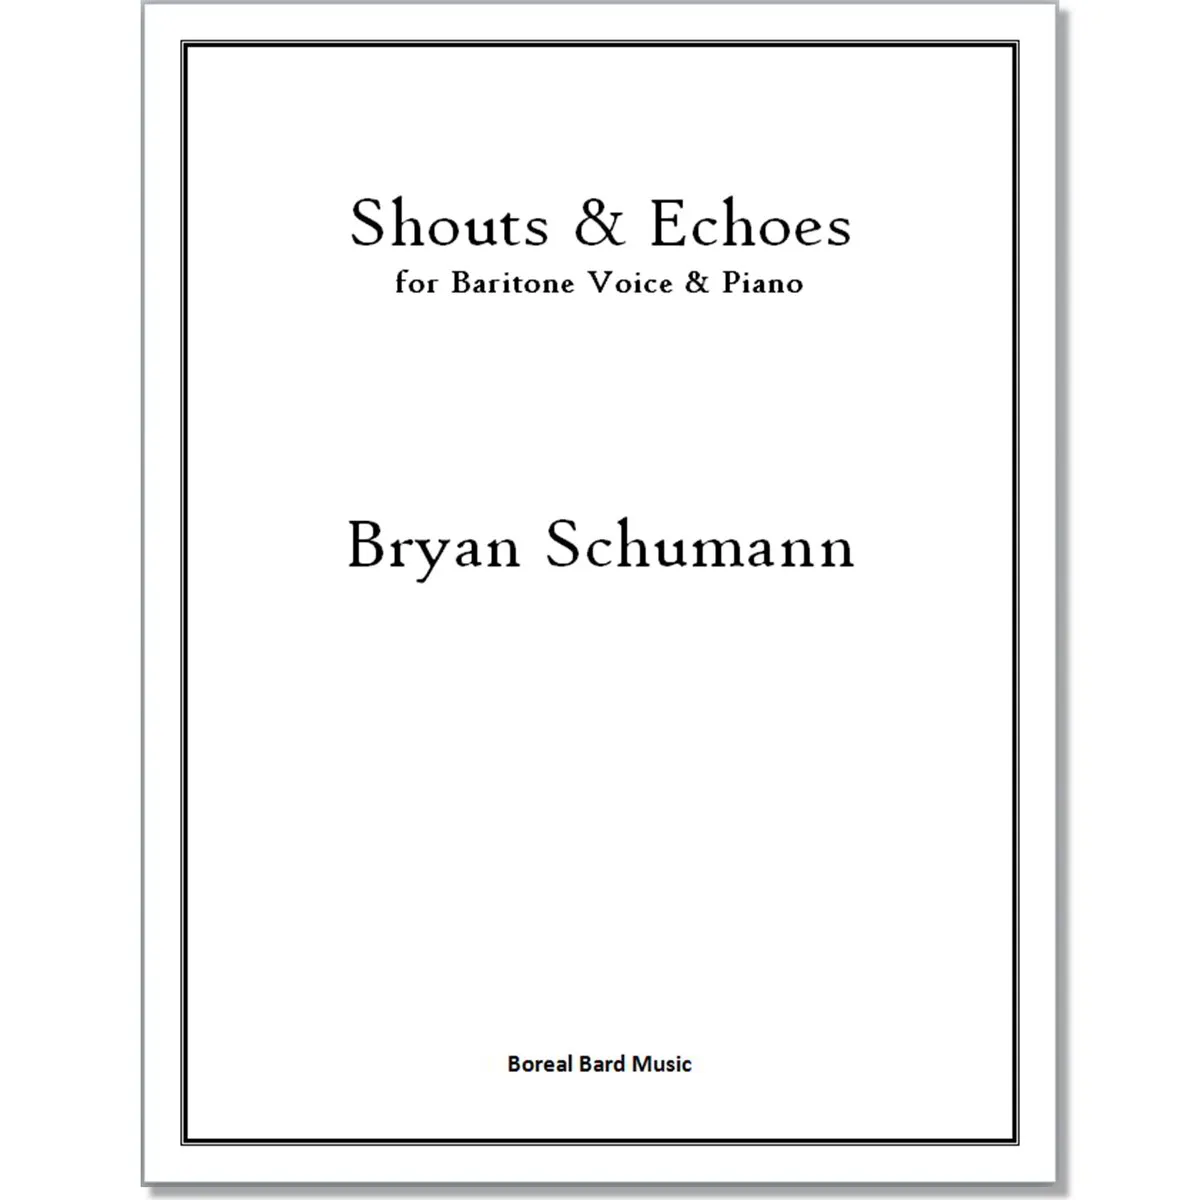 Shouts & Echoes for Baritone Voice & Piano (sheet music)